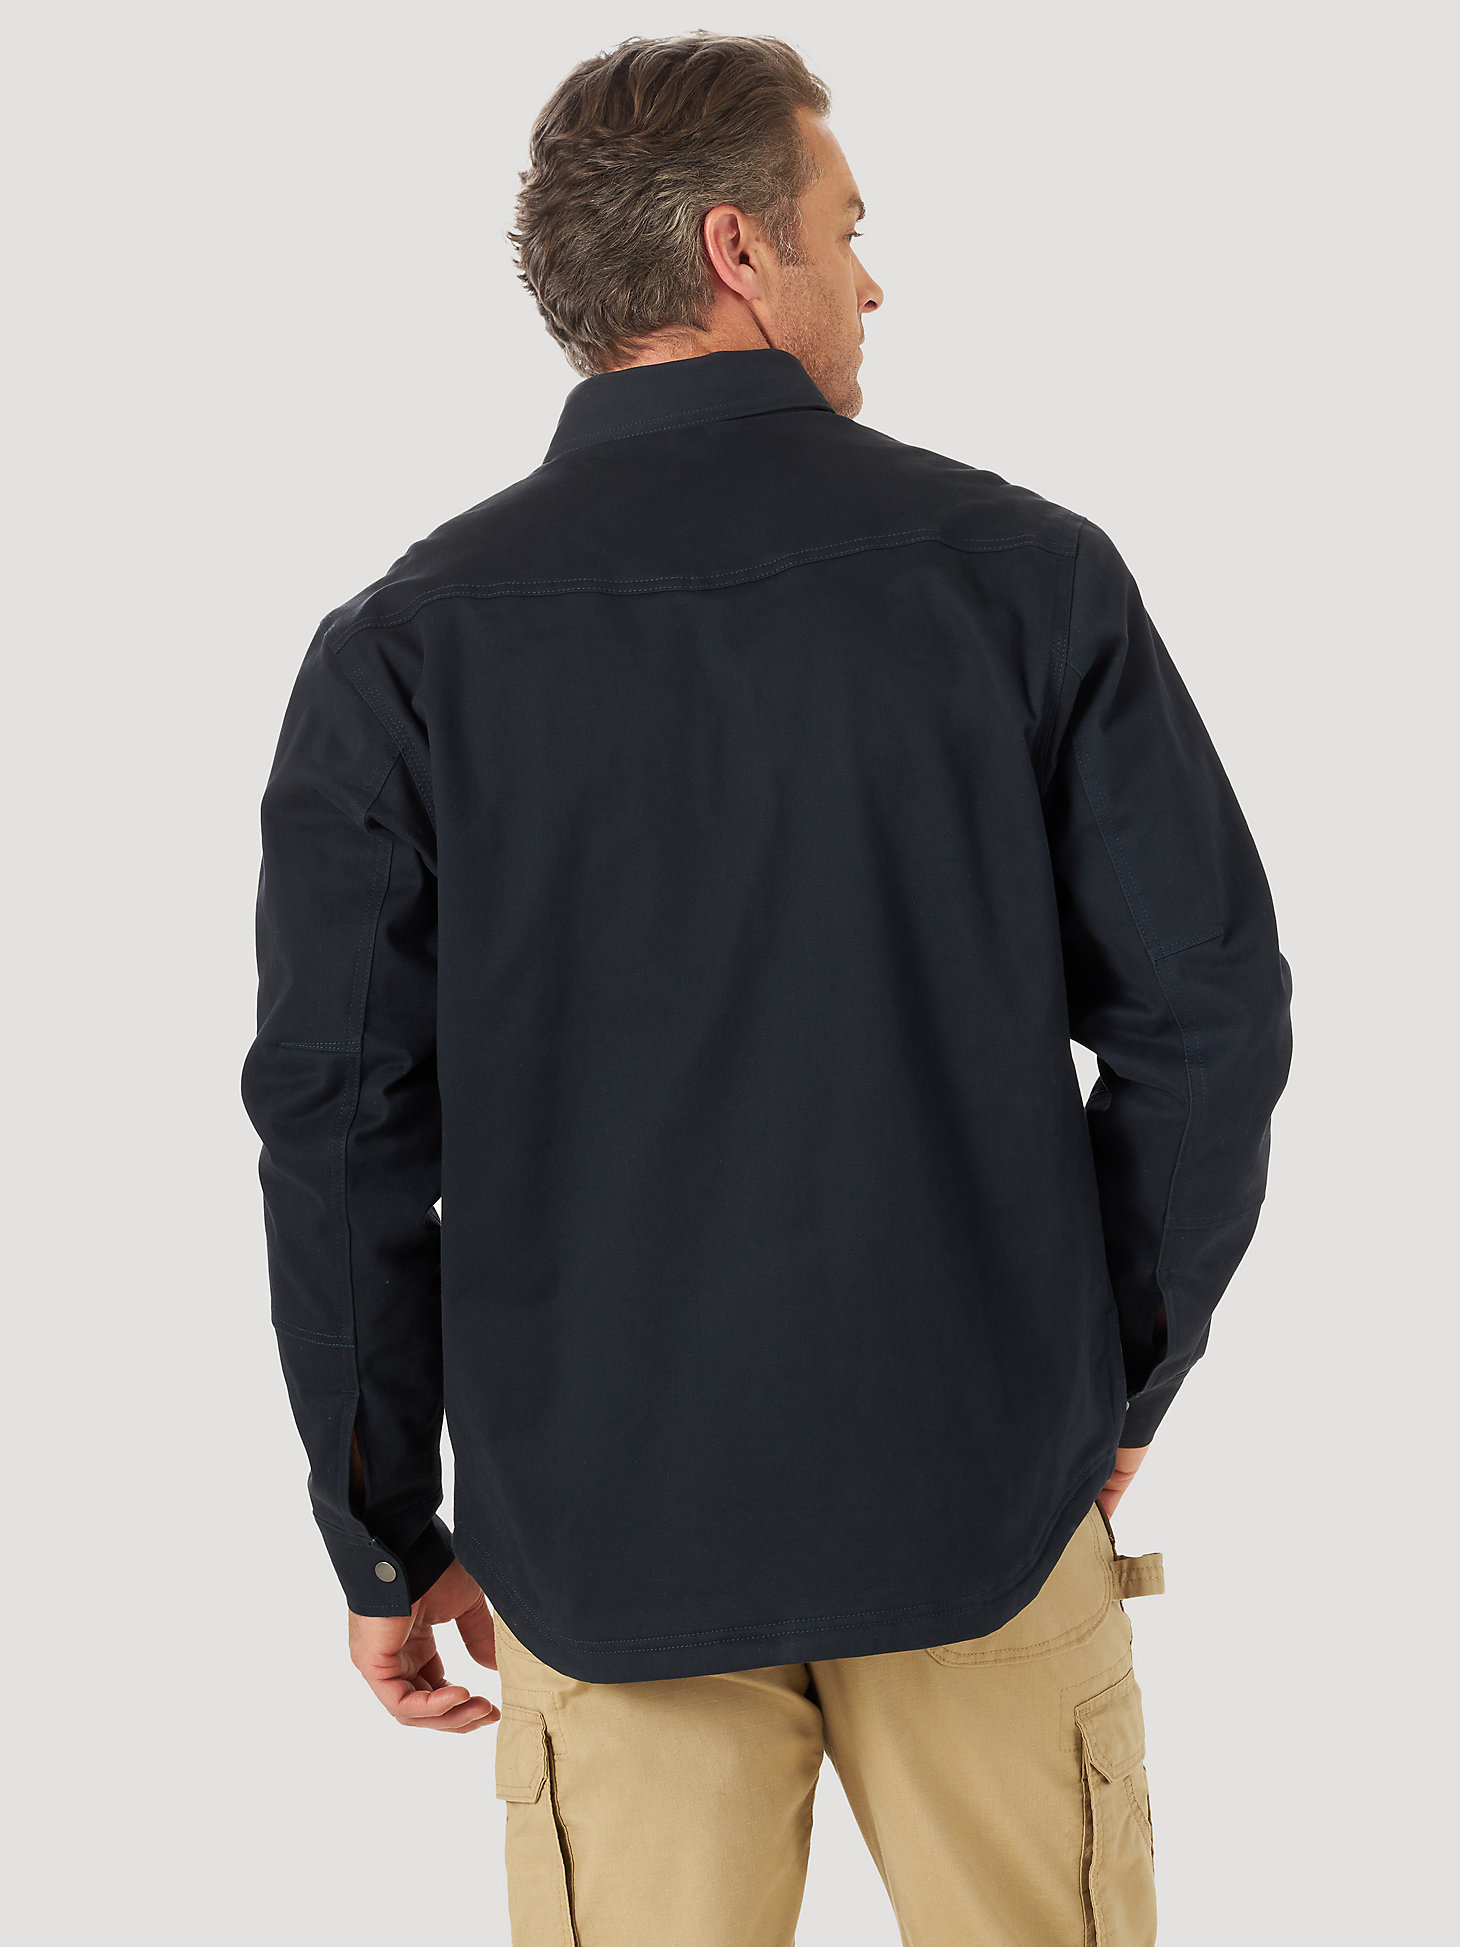 Wrangler® RIGGS Workwear® Tough Layers Fleece Lined Work Shirt Jacket in Dark Navy alternative view 1